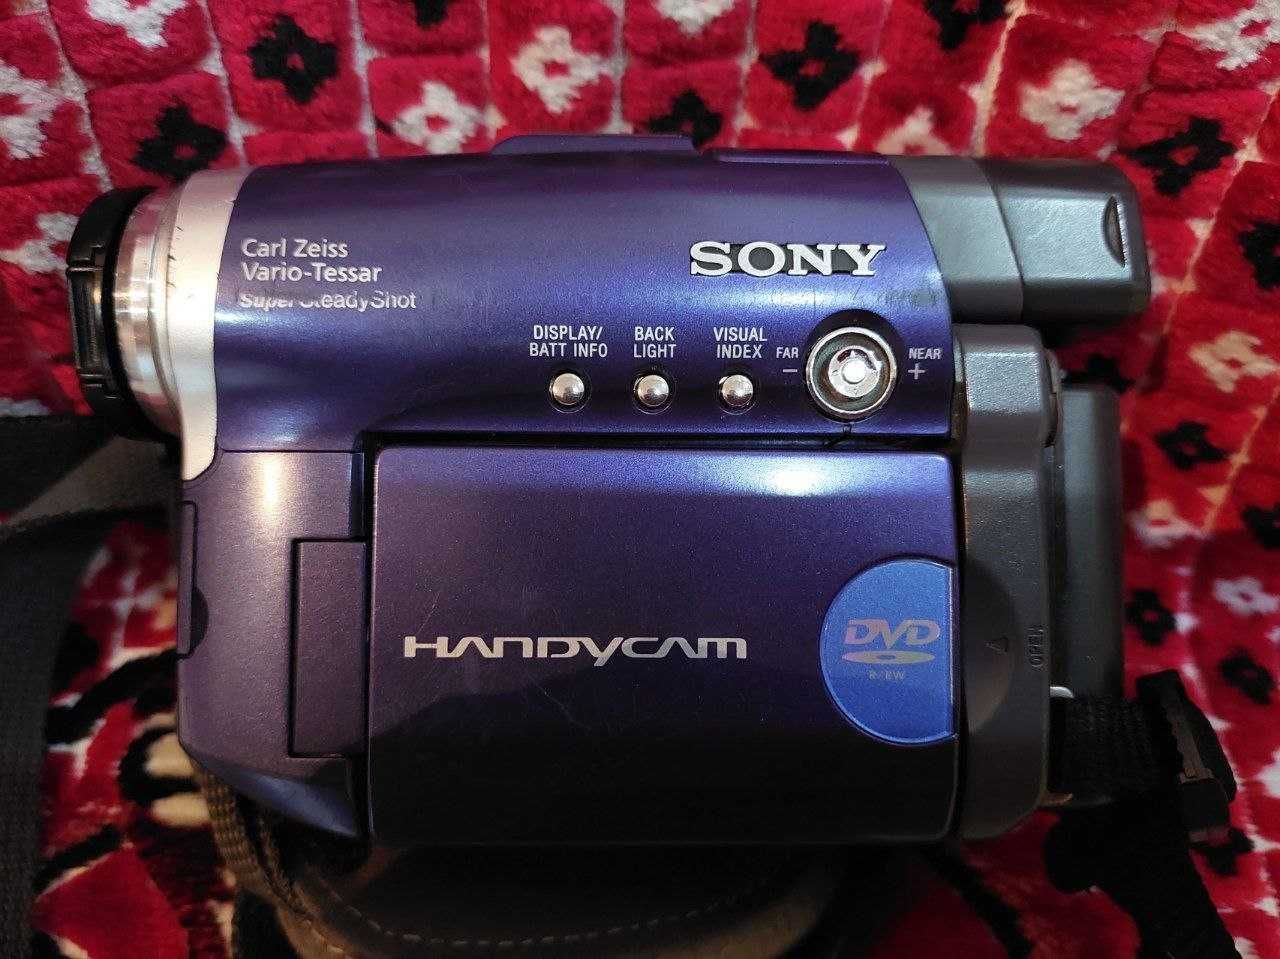 видеокамера sony на двд дисках